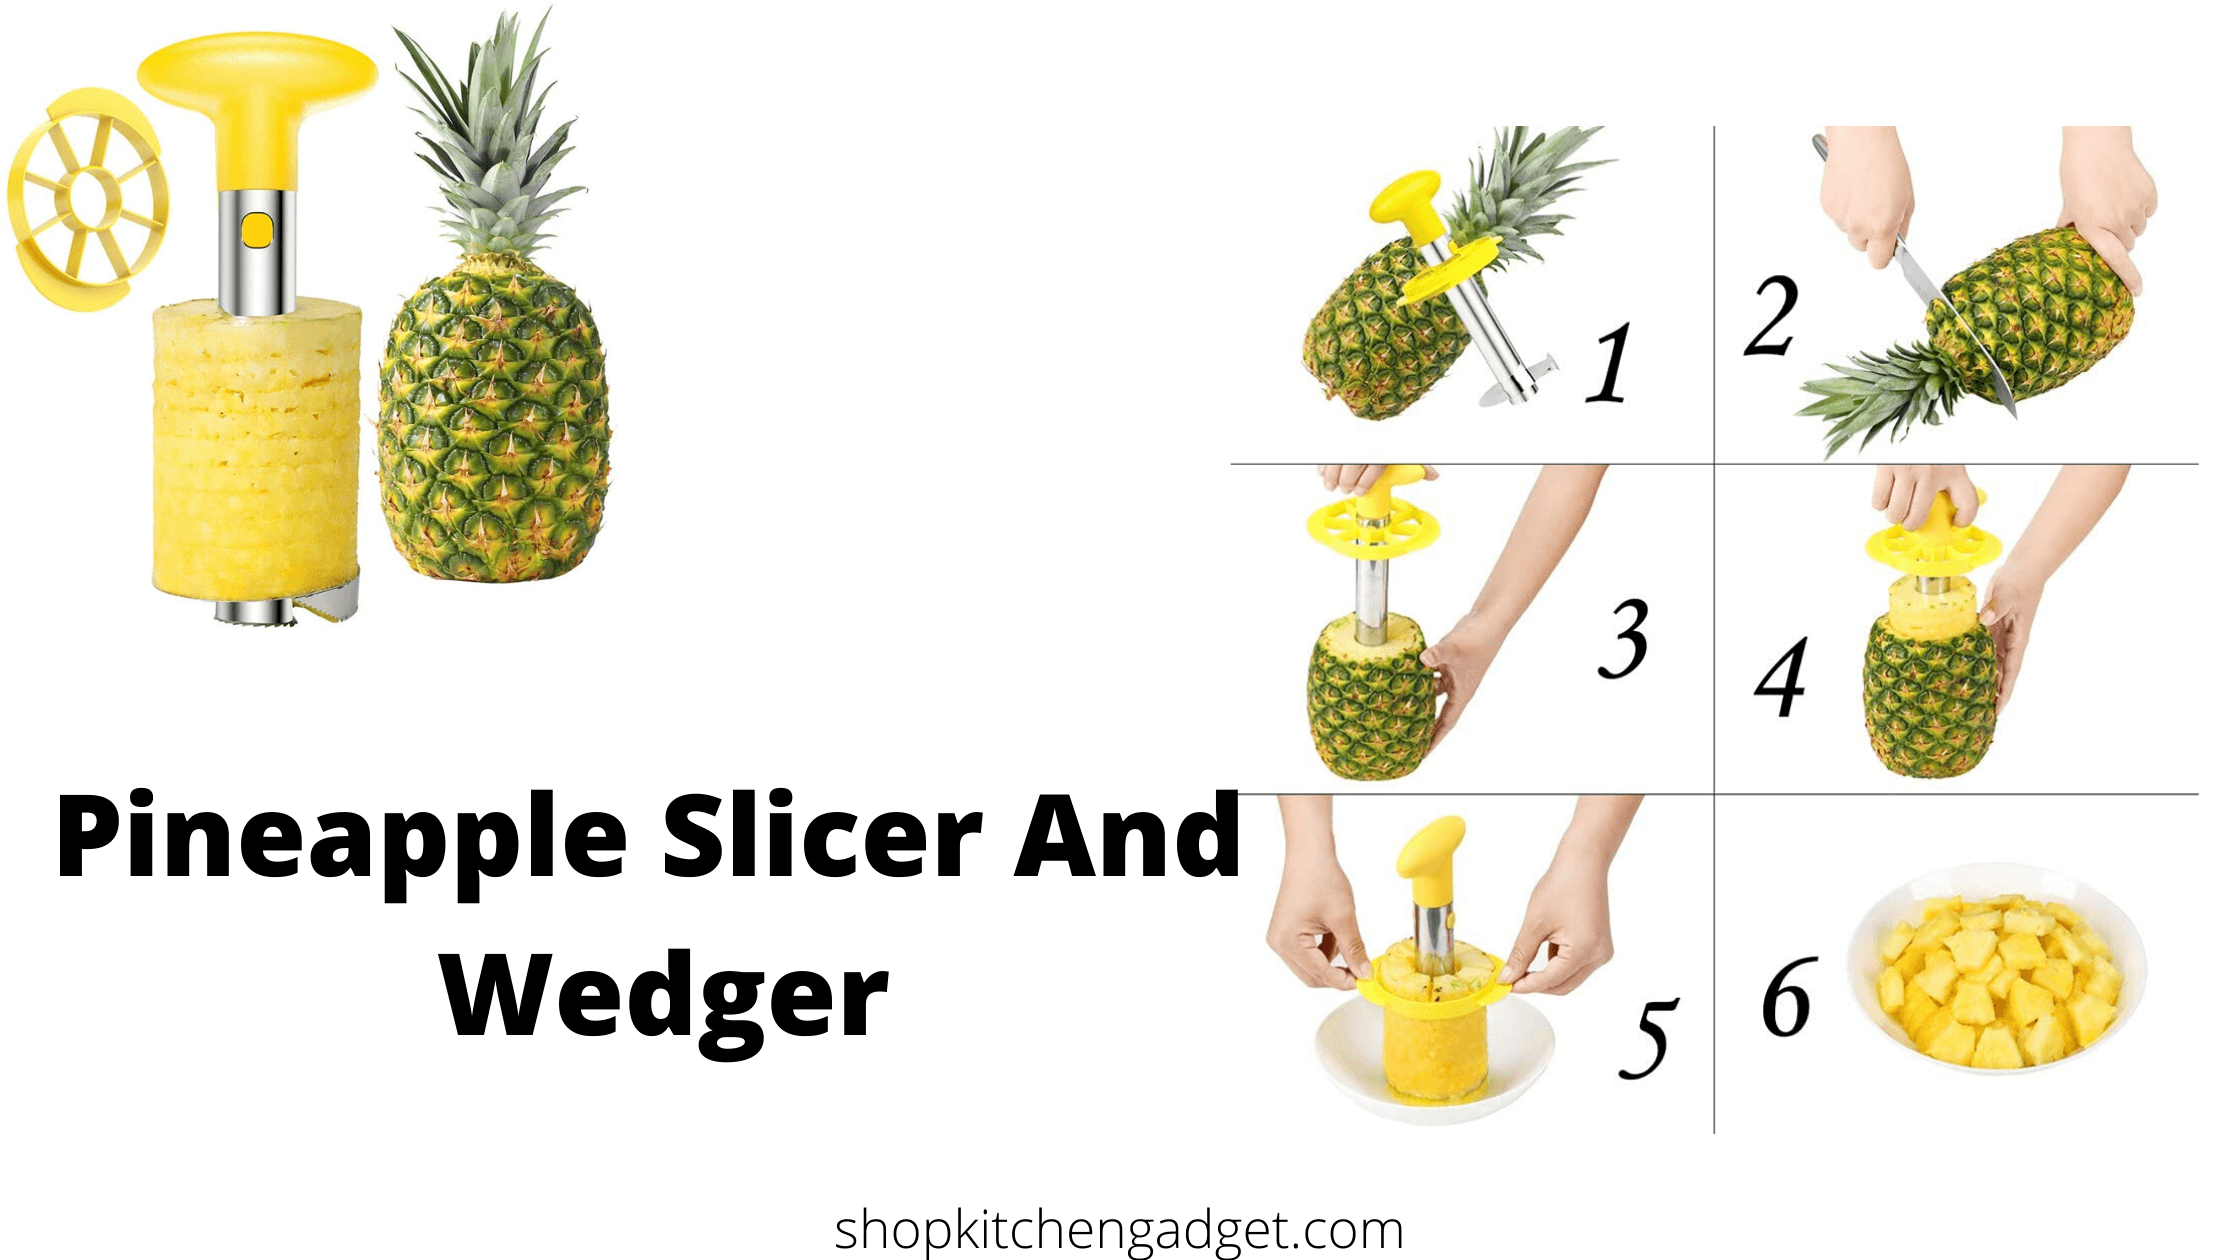 Pineapple Slicer And Wedger